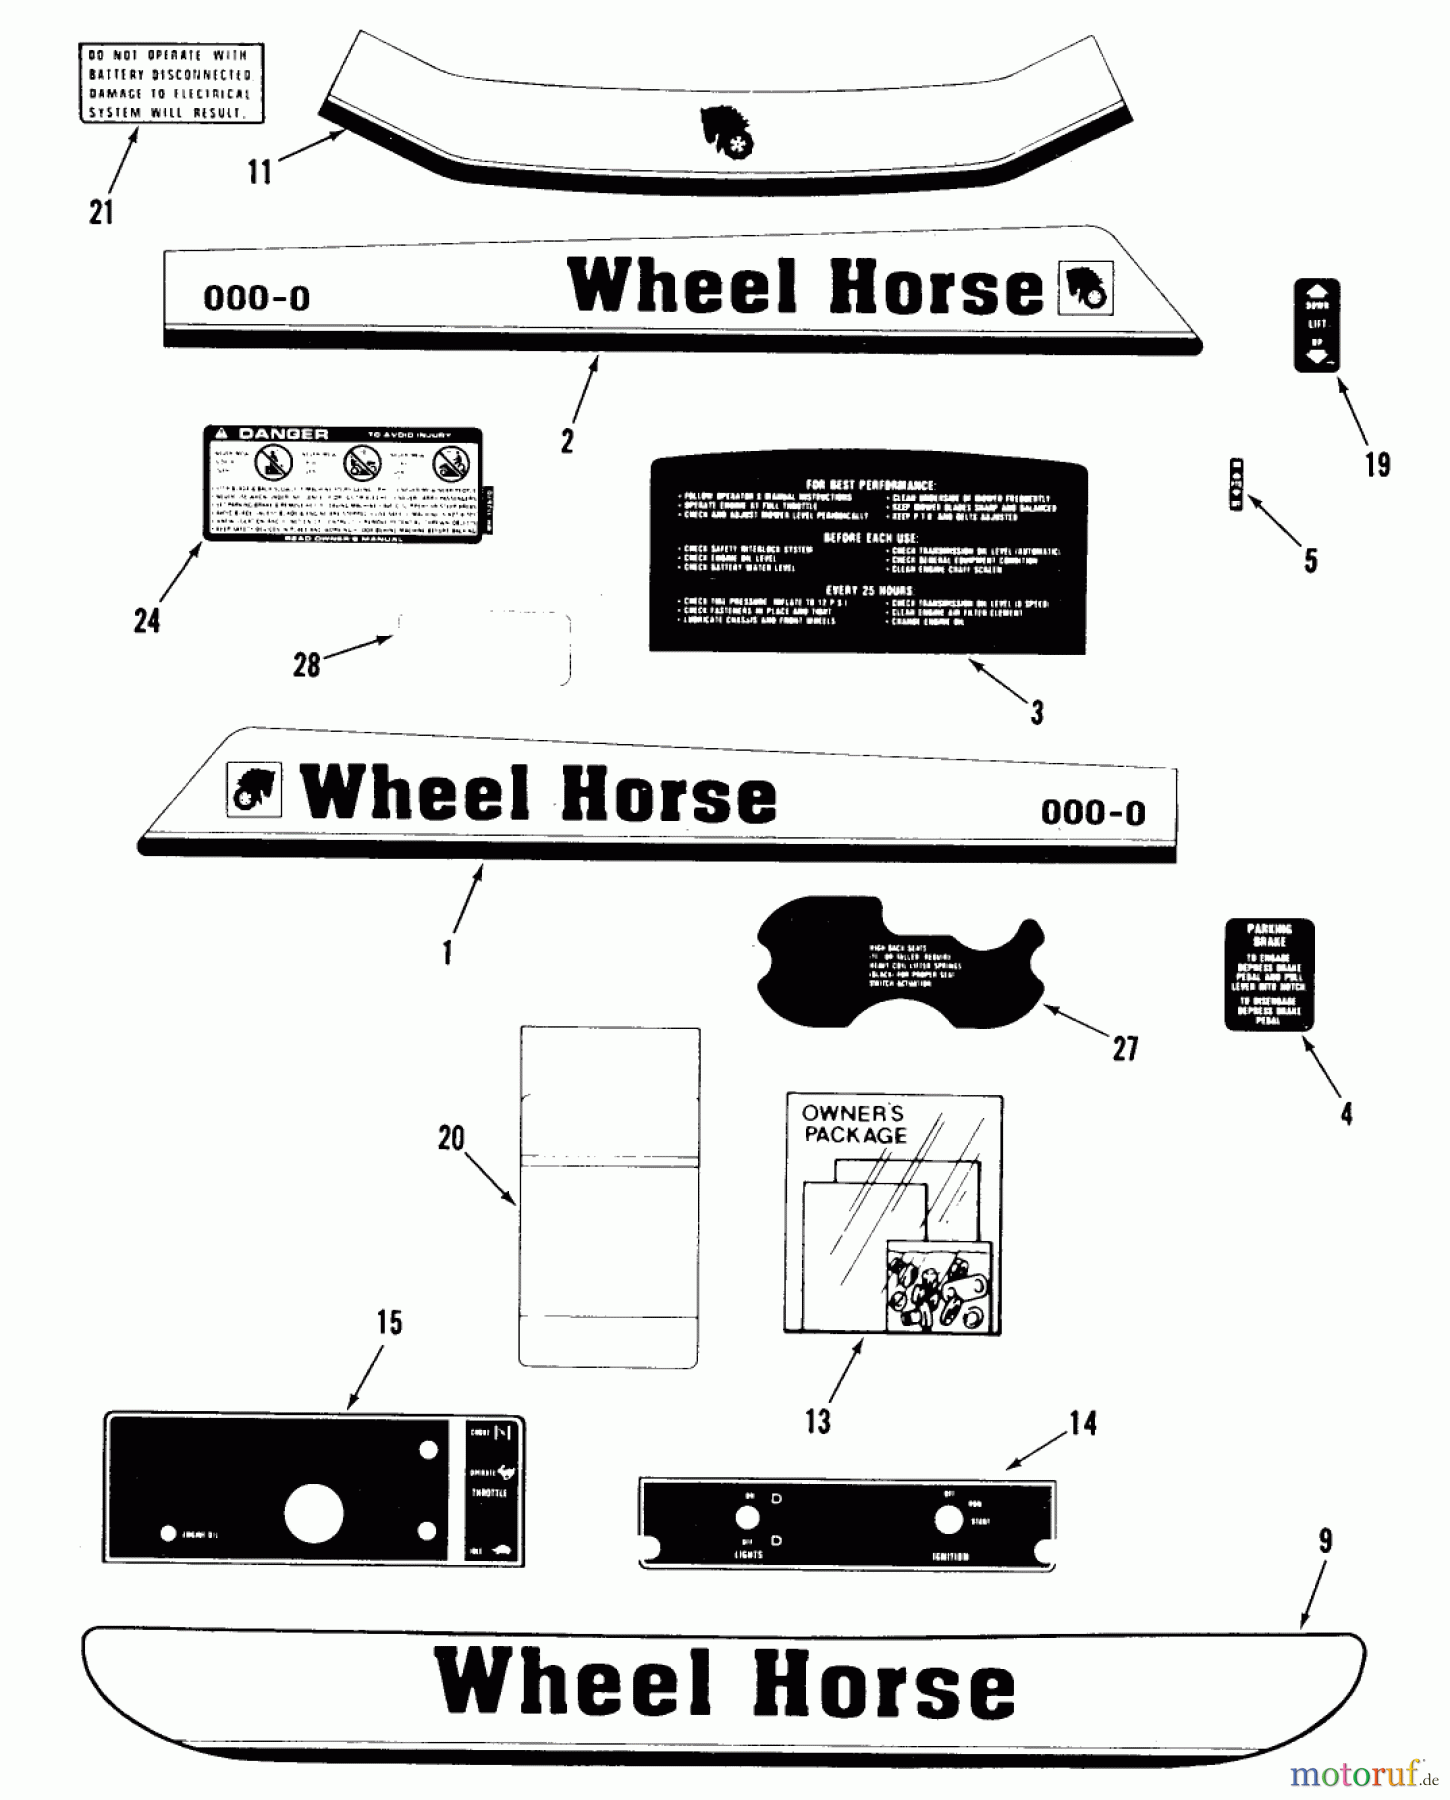  Toro Neu Mowers, Lawn & Garden Tractor Seite 2 E2-13K501 (222-5) - Toro 222-5 Tractor, 1988 DECALS, MISCELLANEOUS